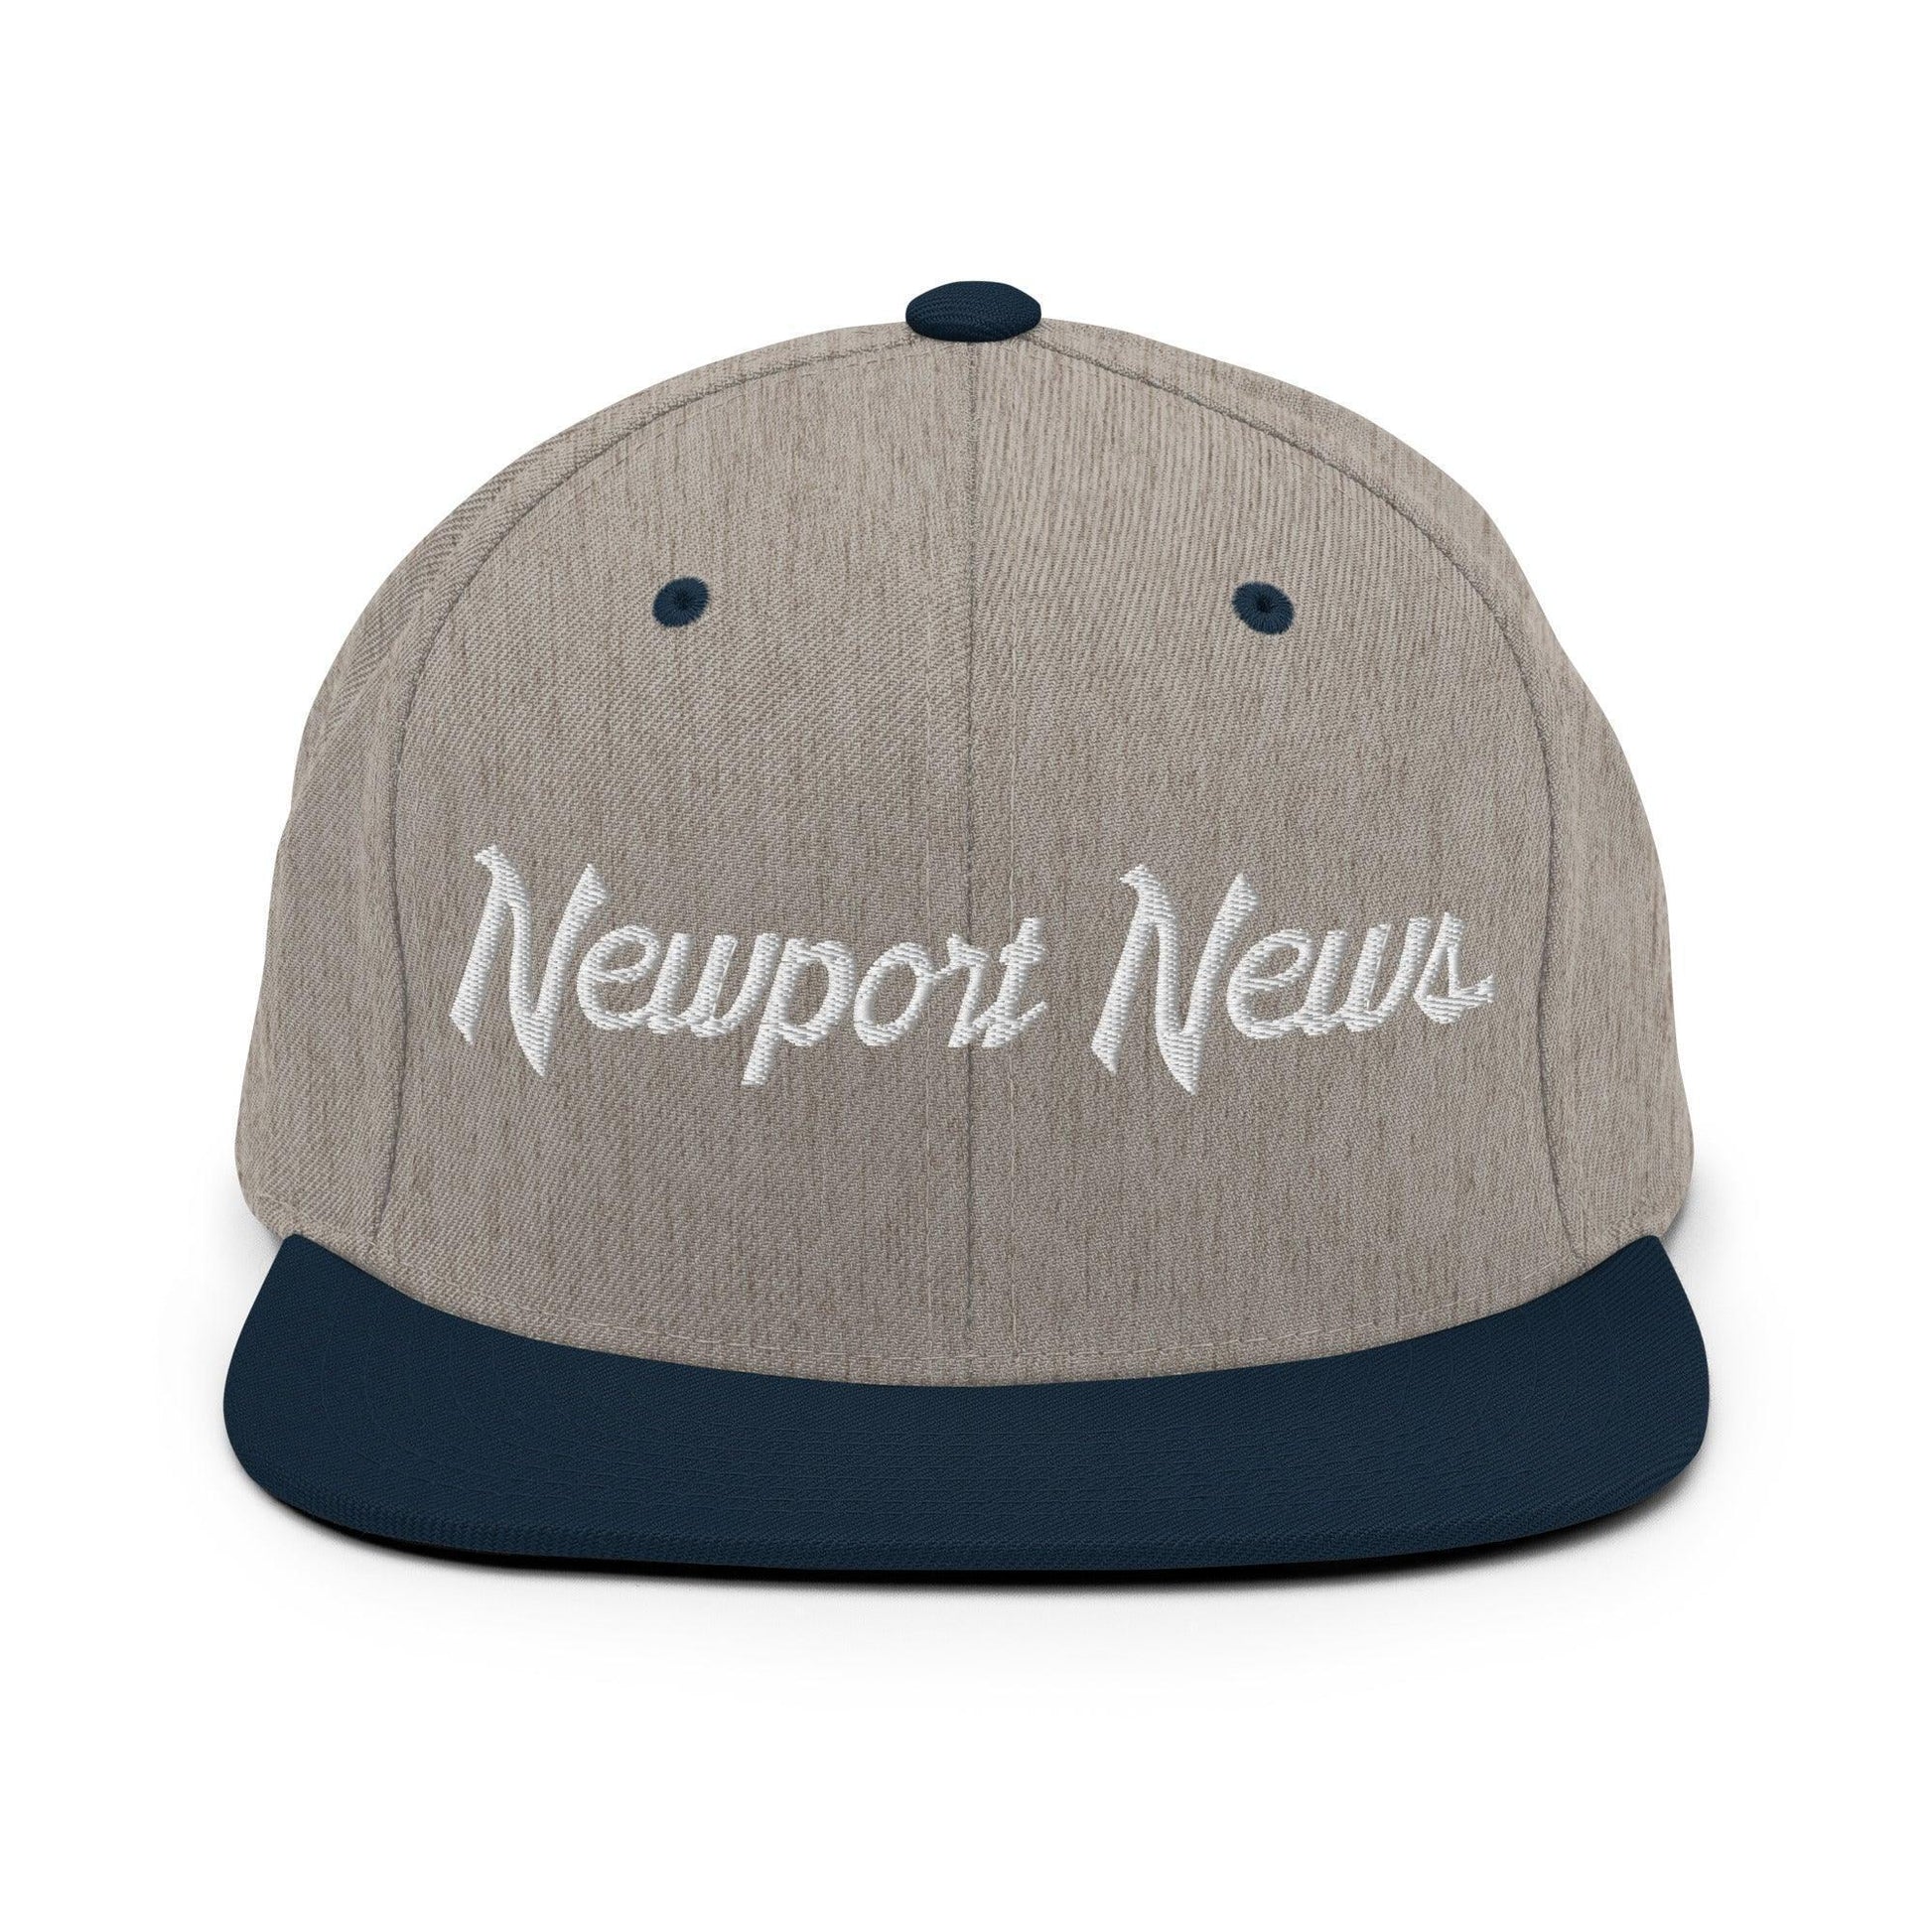 Newport News Script Snapback Hat Heather Grey/ Navy